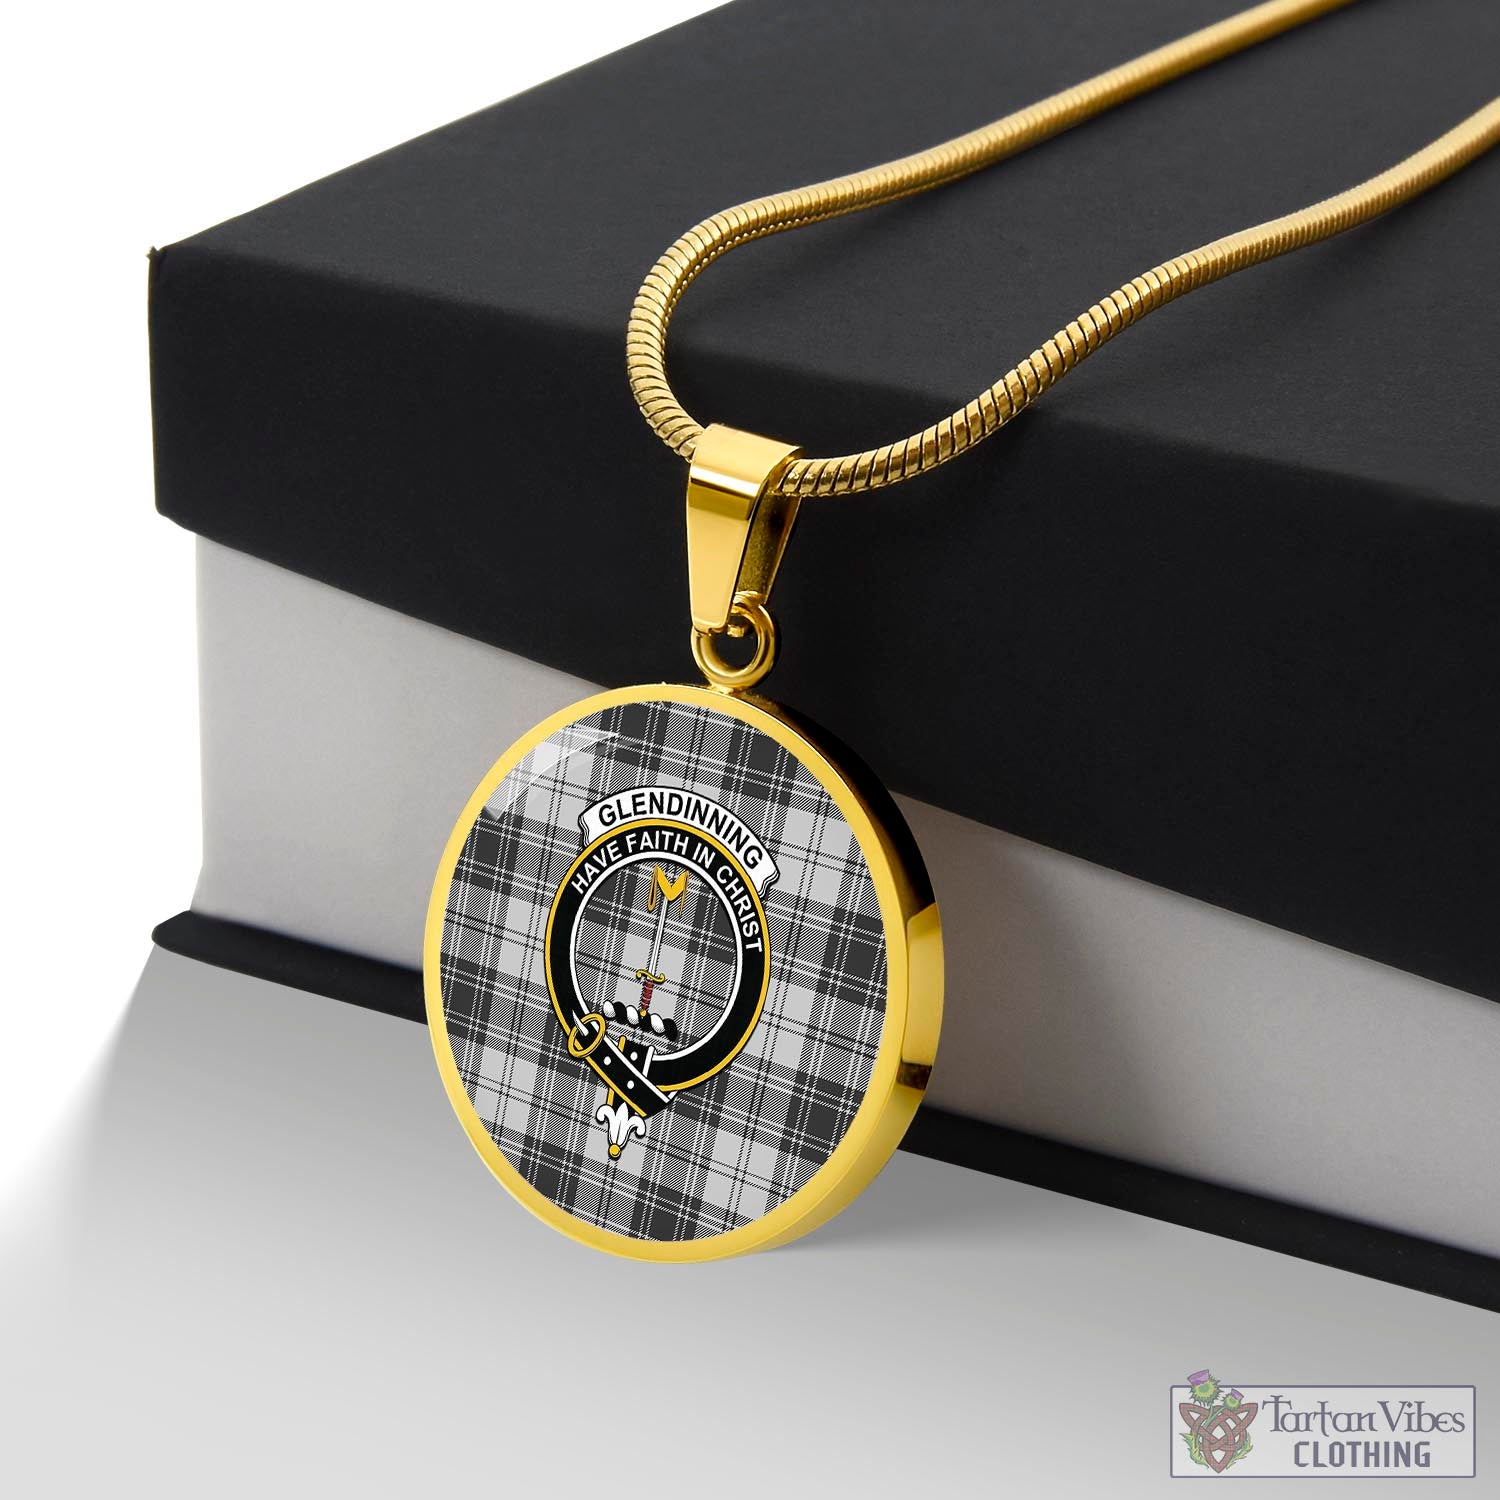 Tartan Vibes Clothing Glendinning Tartan Circle Necklace with Family Crest